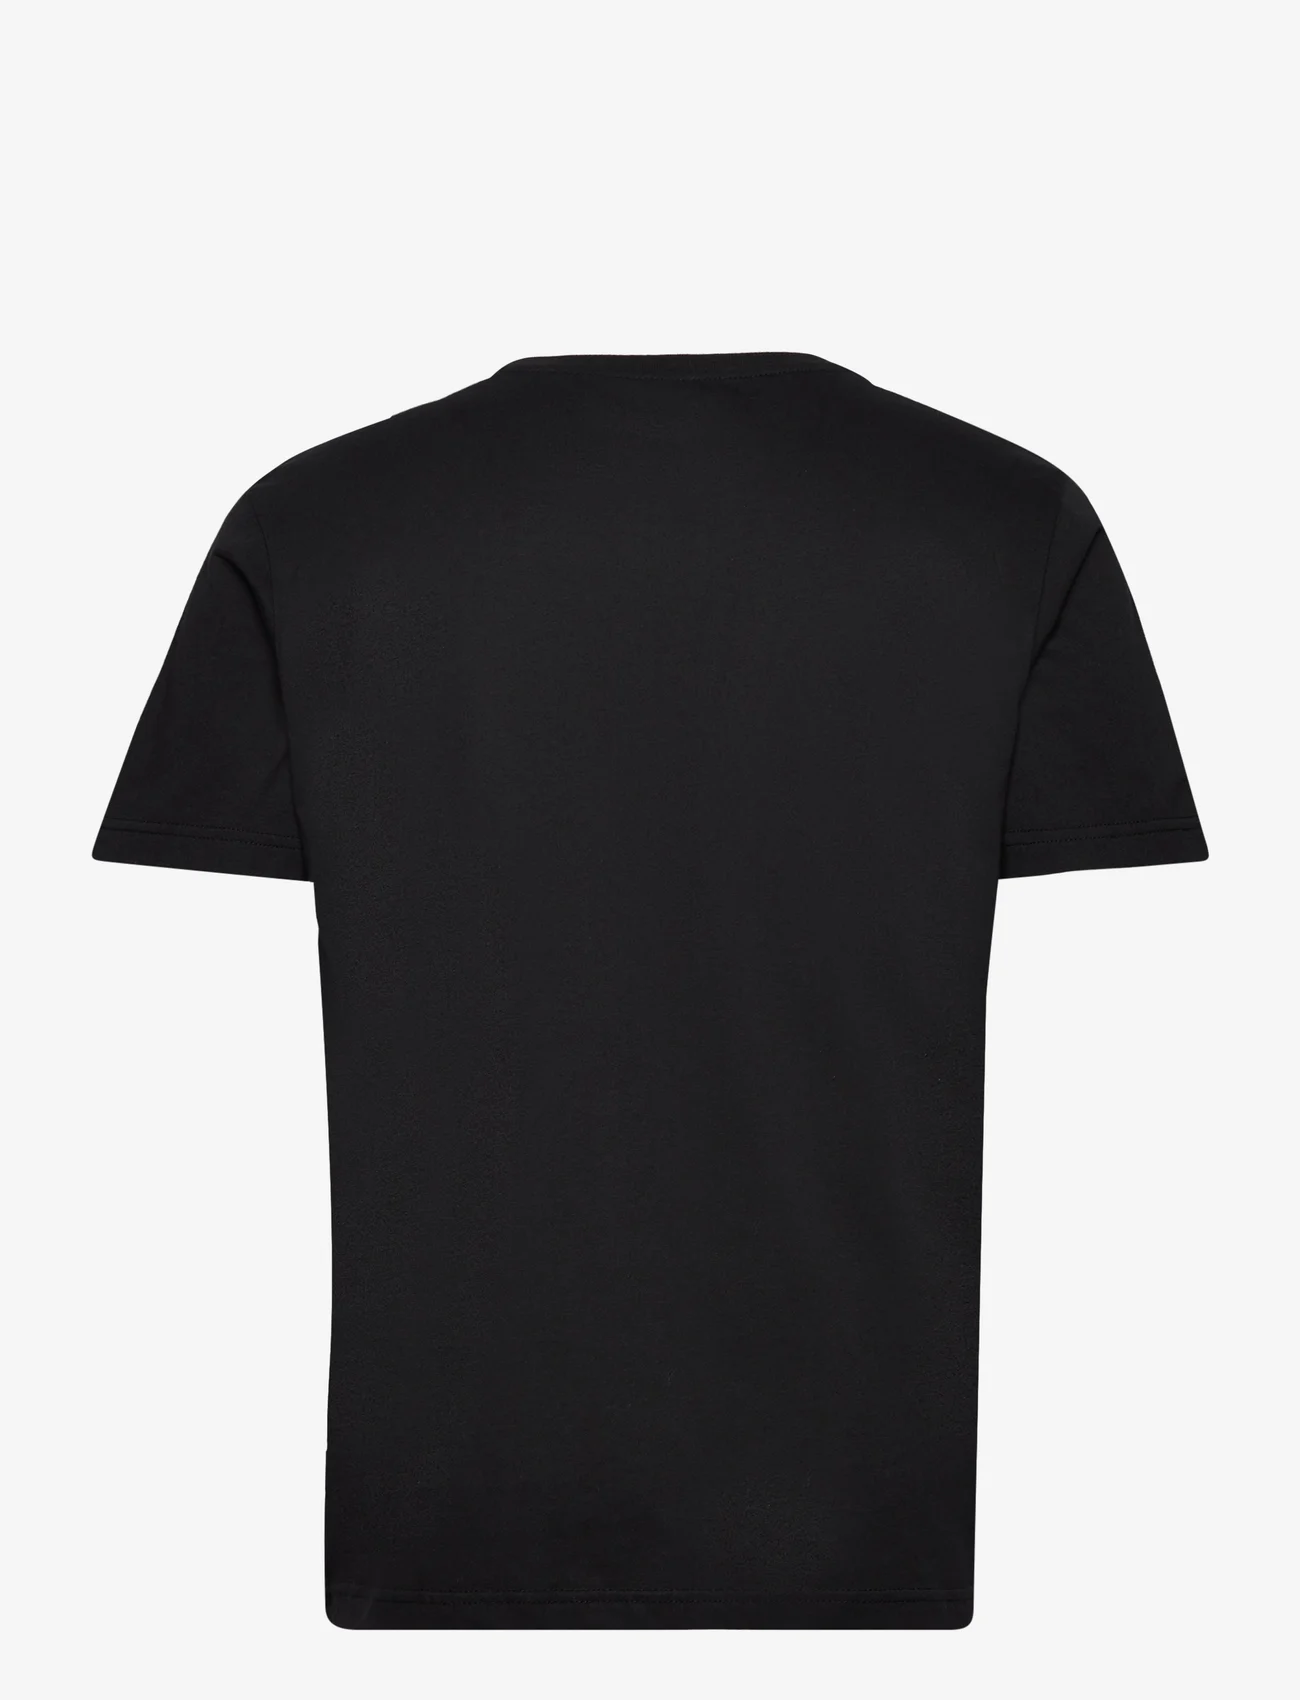 Makia - Hook t-shirt - nordic style - black - 1